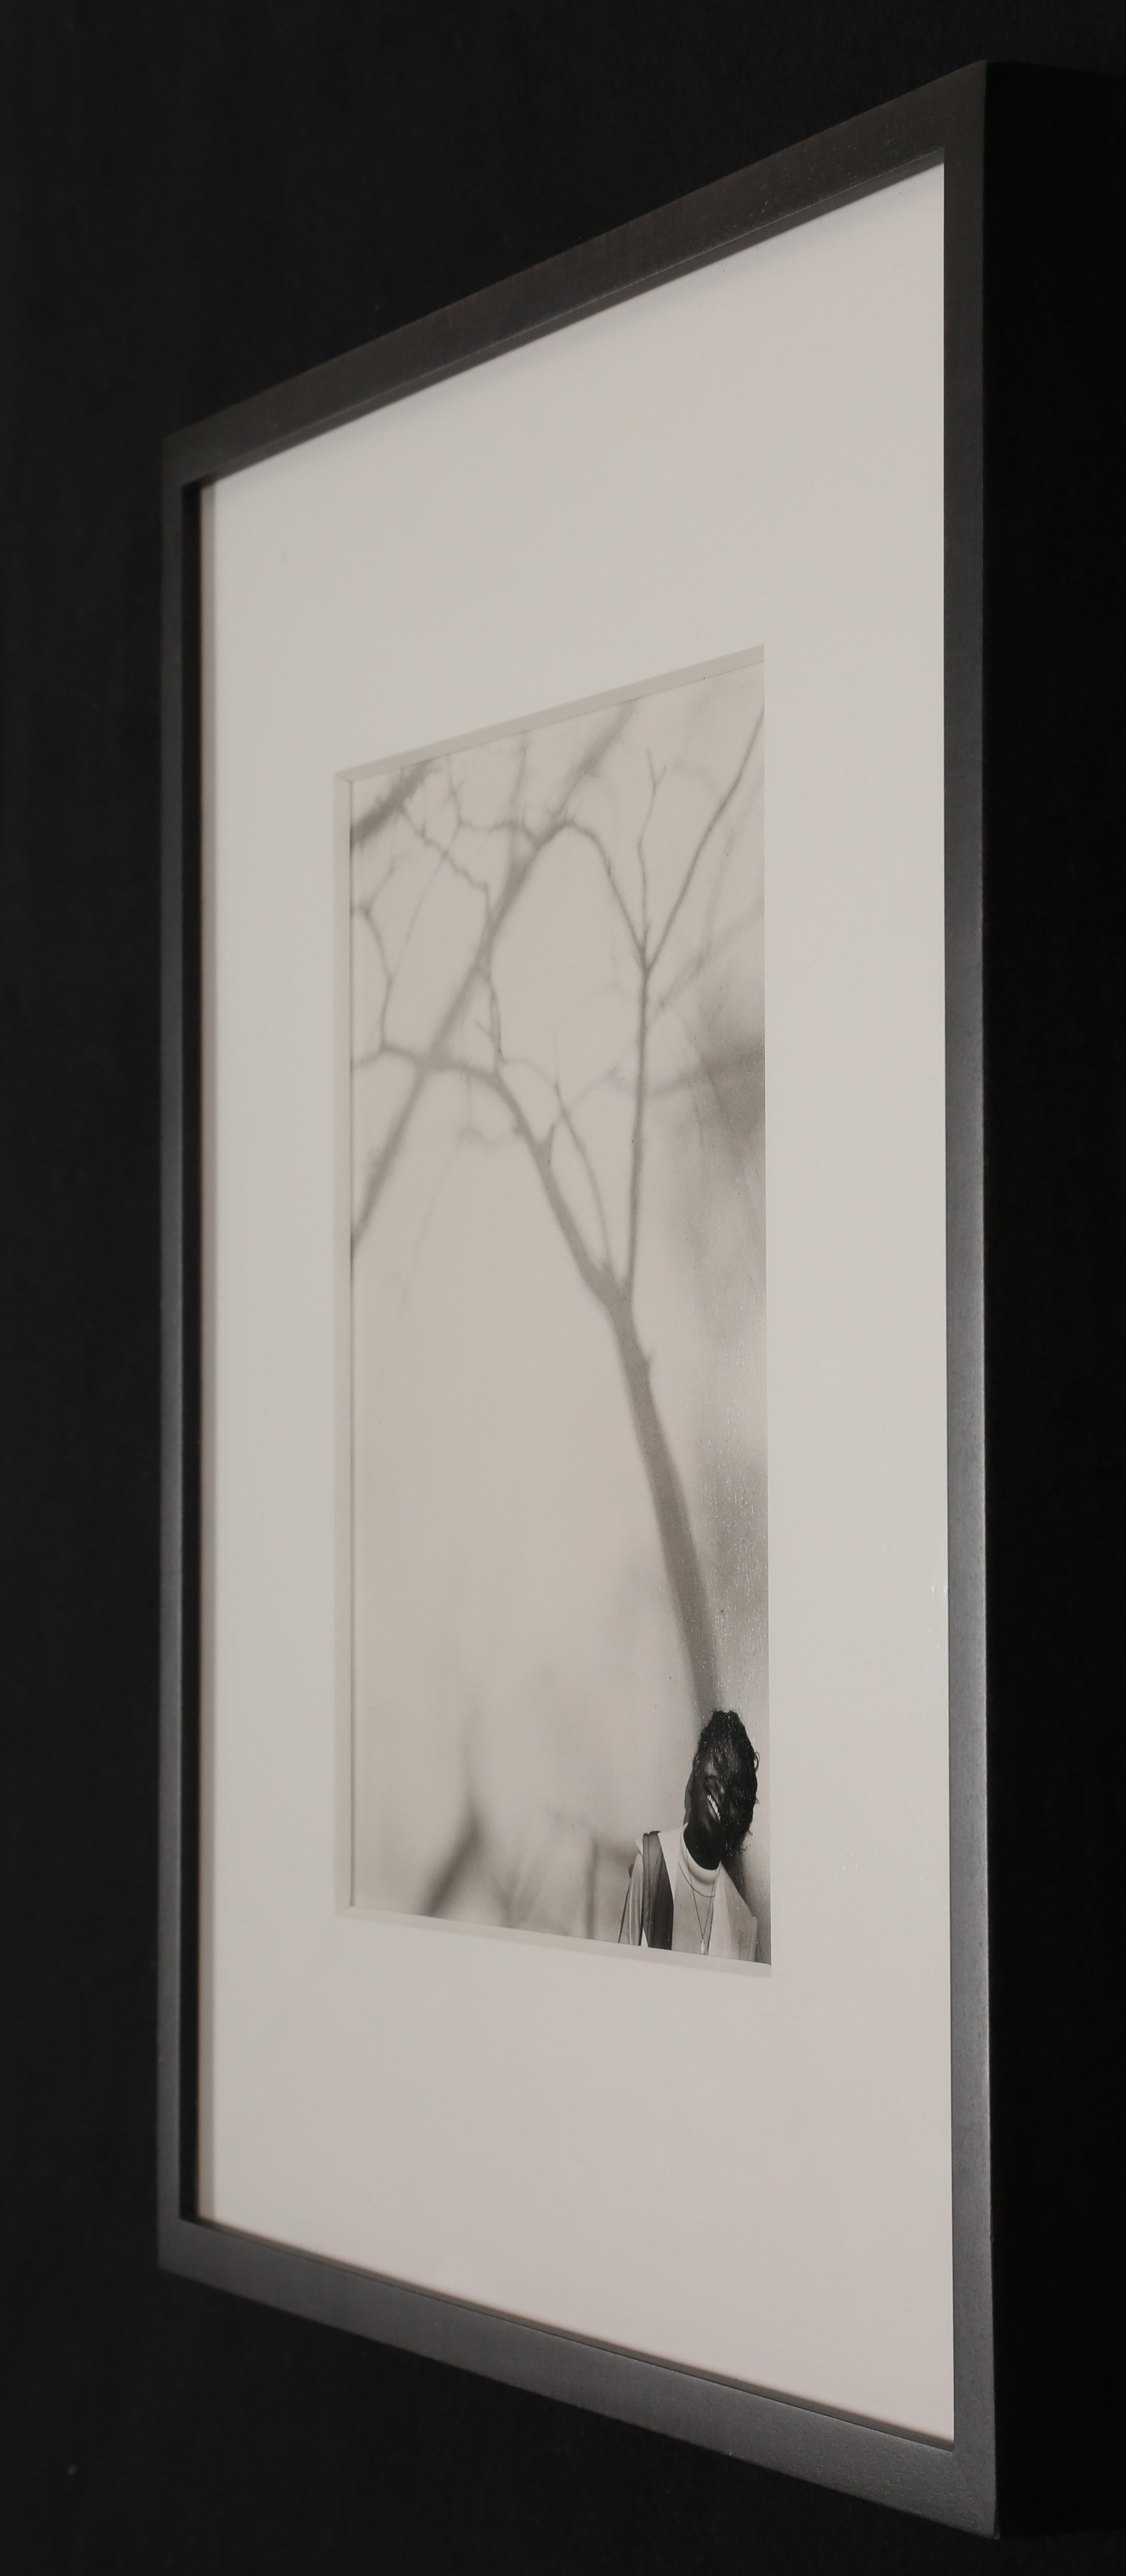 Sally Mann
Tara and Tree Shadow, 1983
Gelatin silver print
10 x 8 inches  (25.4 x 20.3 cm)
Edition of 25